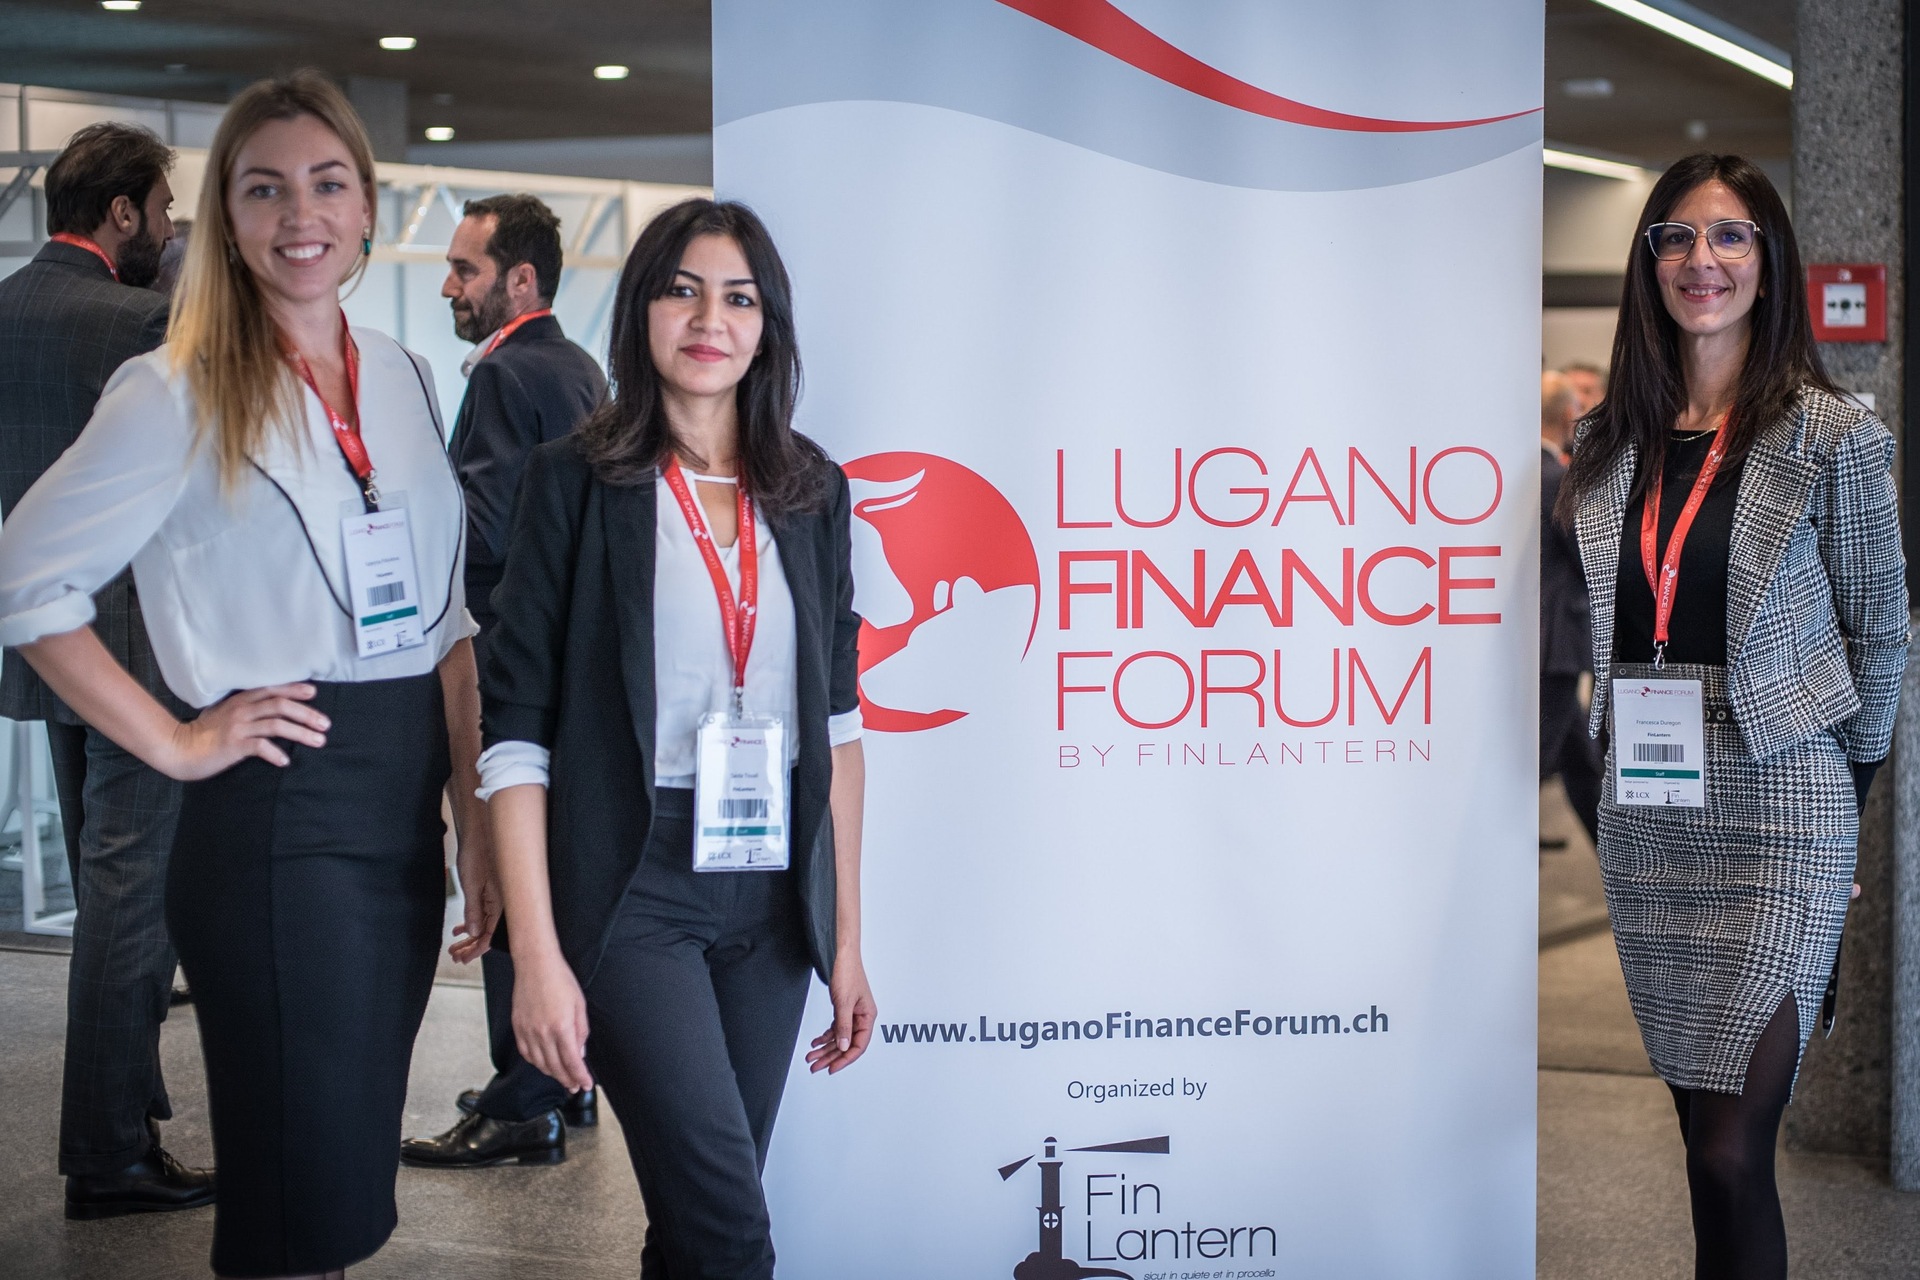 Lugano Finance Forum: de tentoonstellingsruimte van de editie 2022 van het "Lugano Finance Forum"